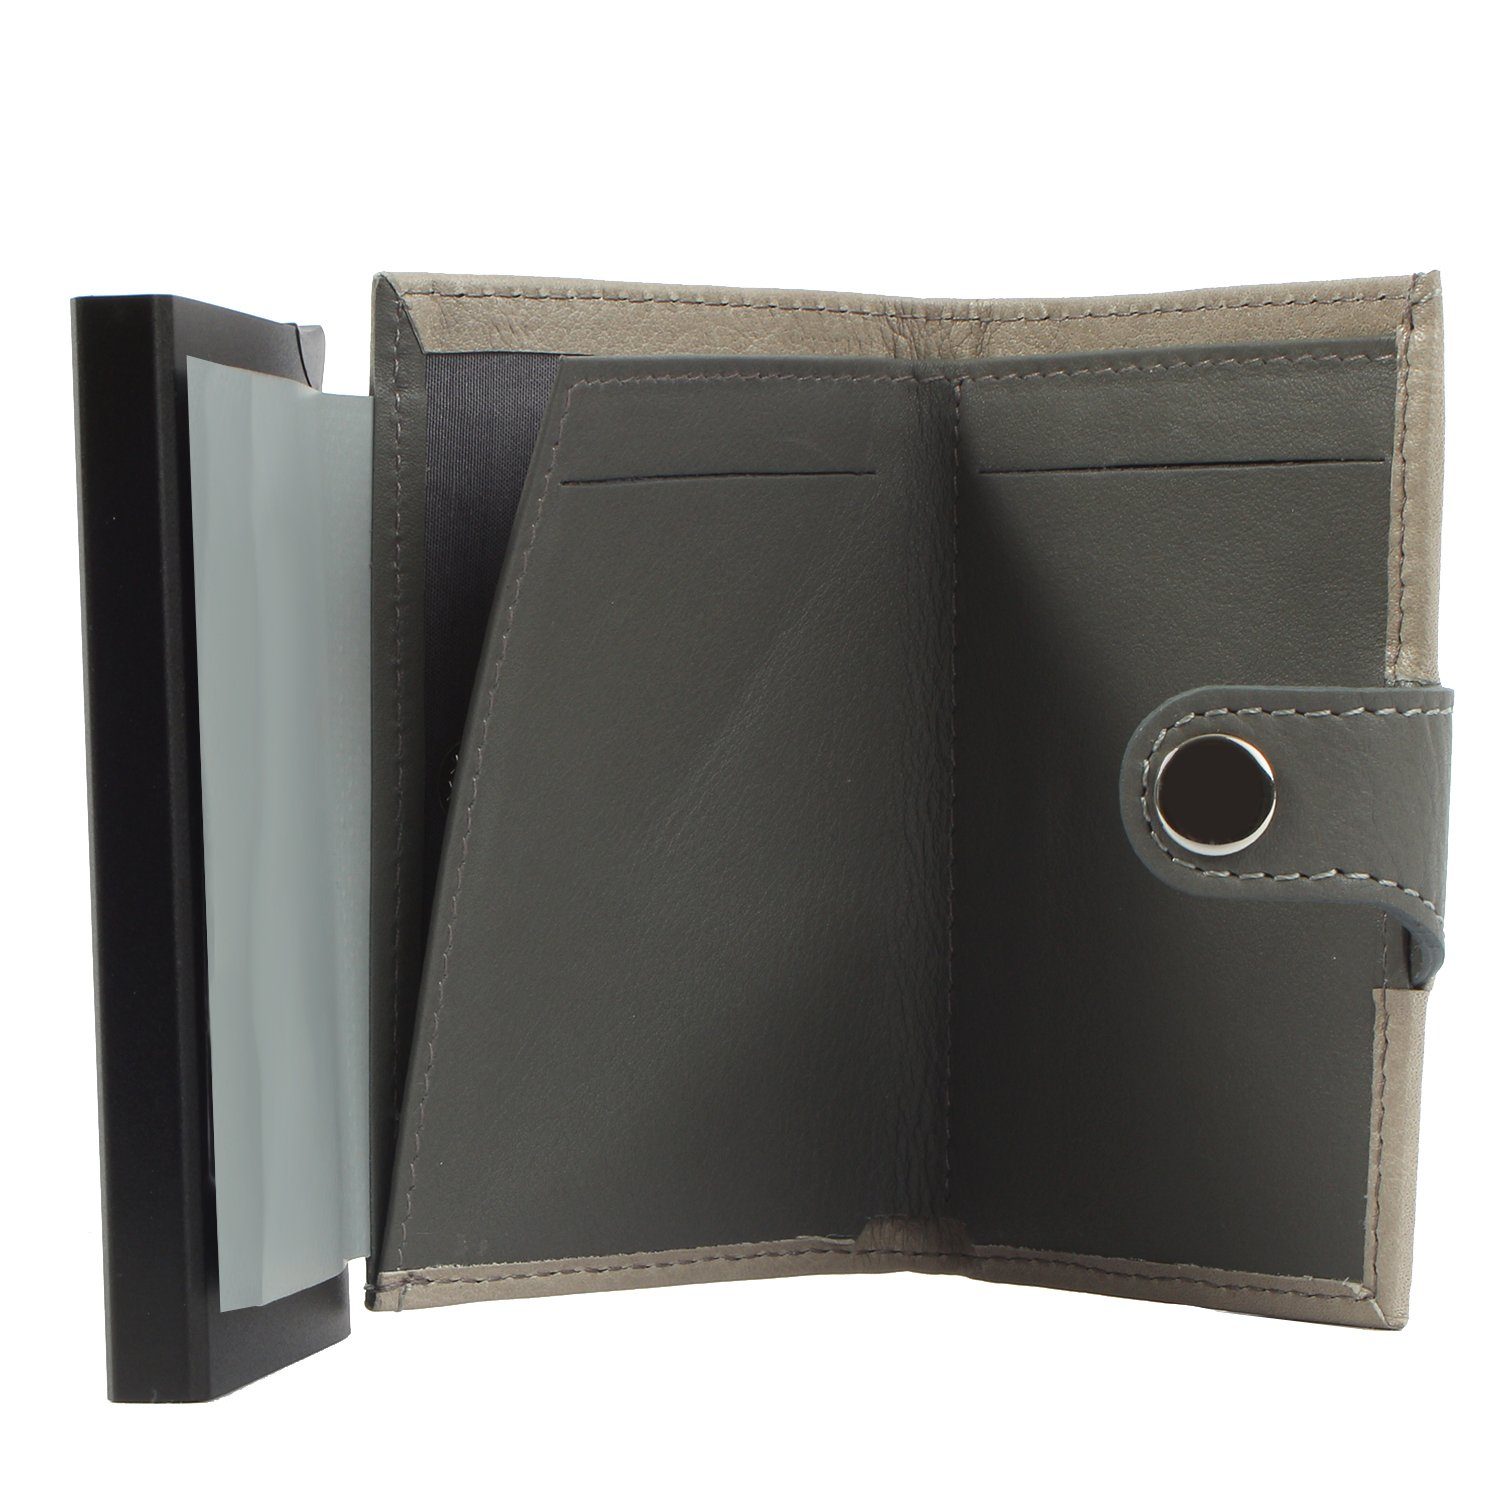 Margelisch Mini single Leder salmon Geldbörse leather, aus Kreditkartenbörse Upcycling noonyu